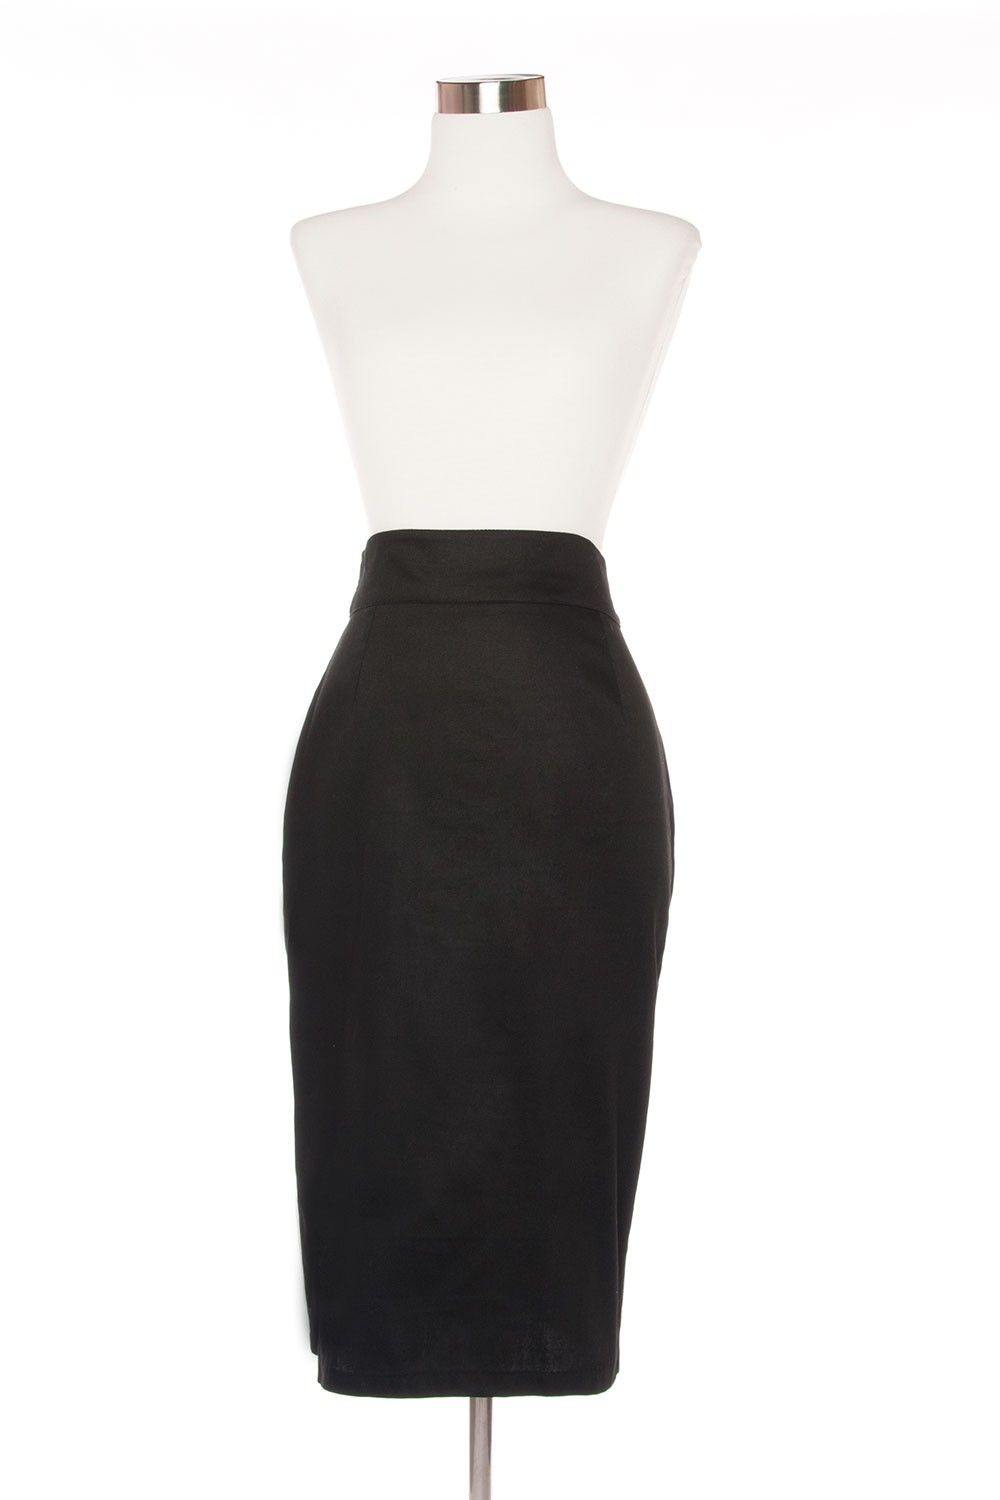 Vintage High Waist Pencil Skirt in Solid Black  | Laura Byrnes Design - pinupgirlclothing.com